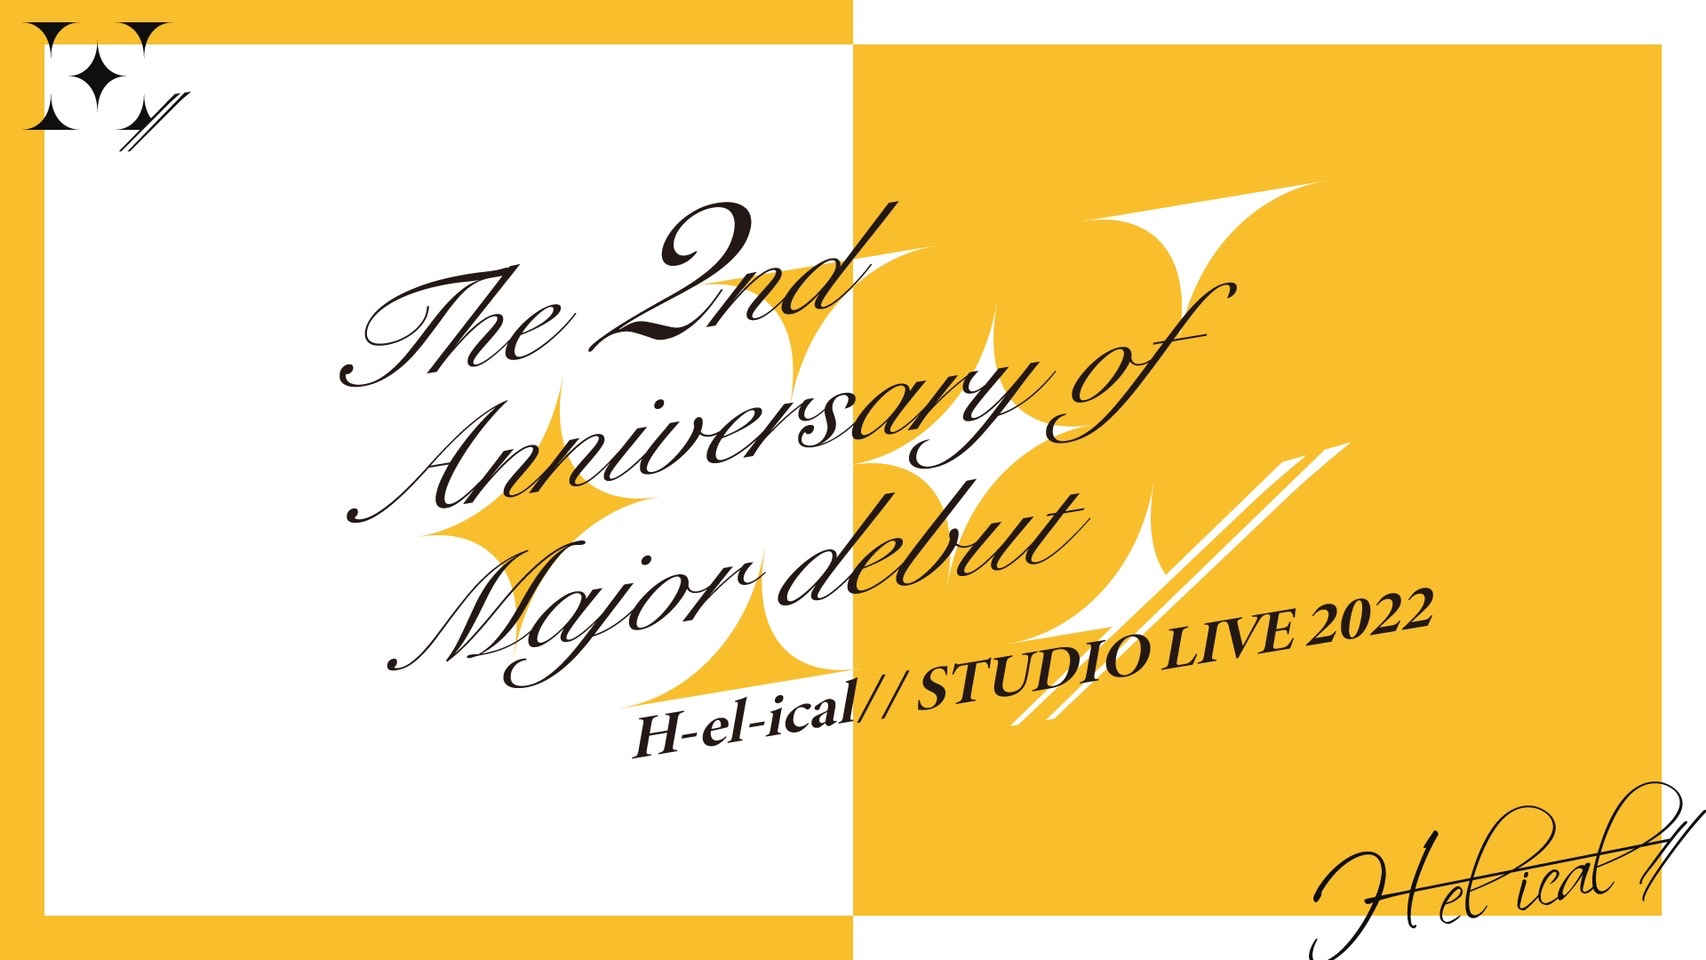 H-el-ical// STUDIO LIVE 2022 〜The 2nd Anniversary of Major debut〜